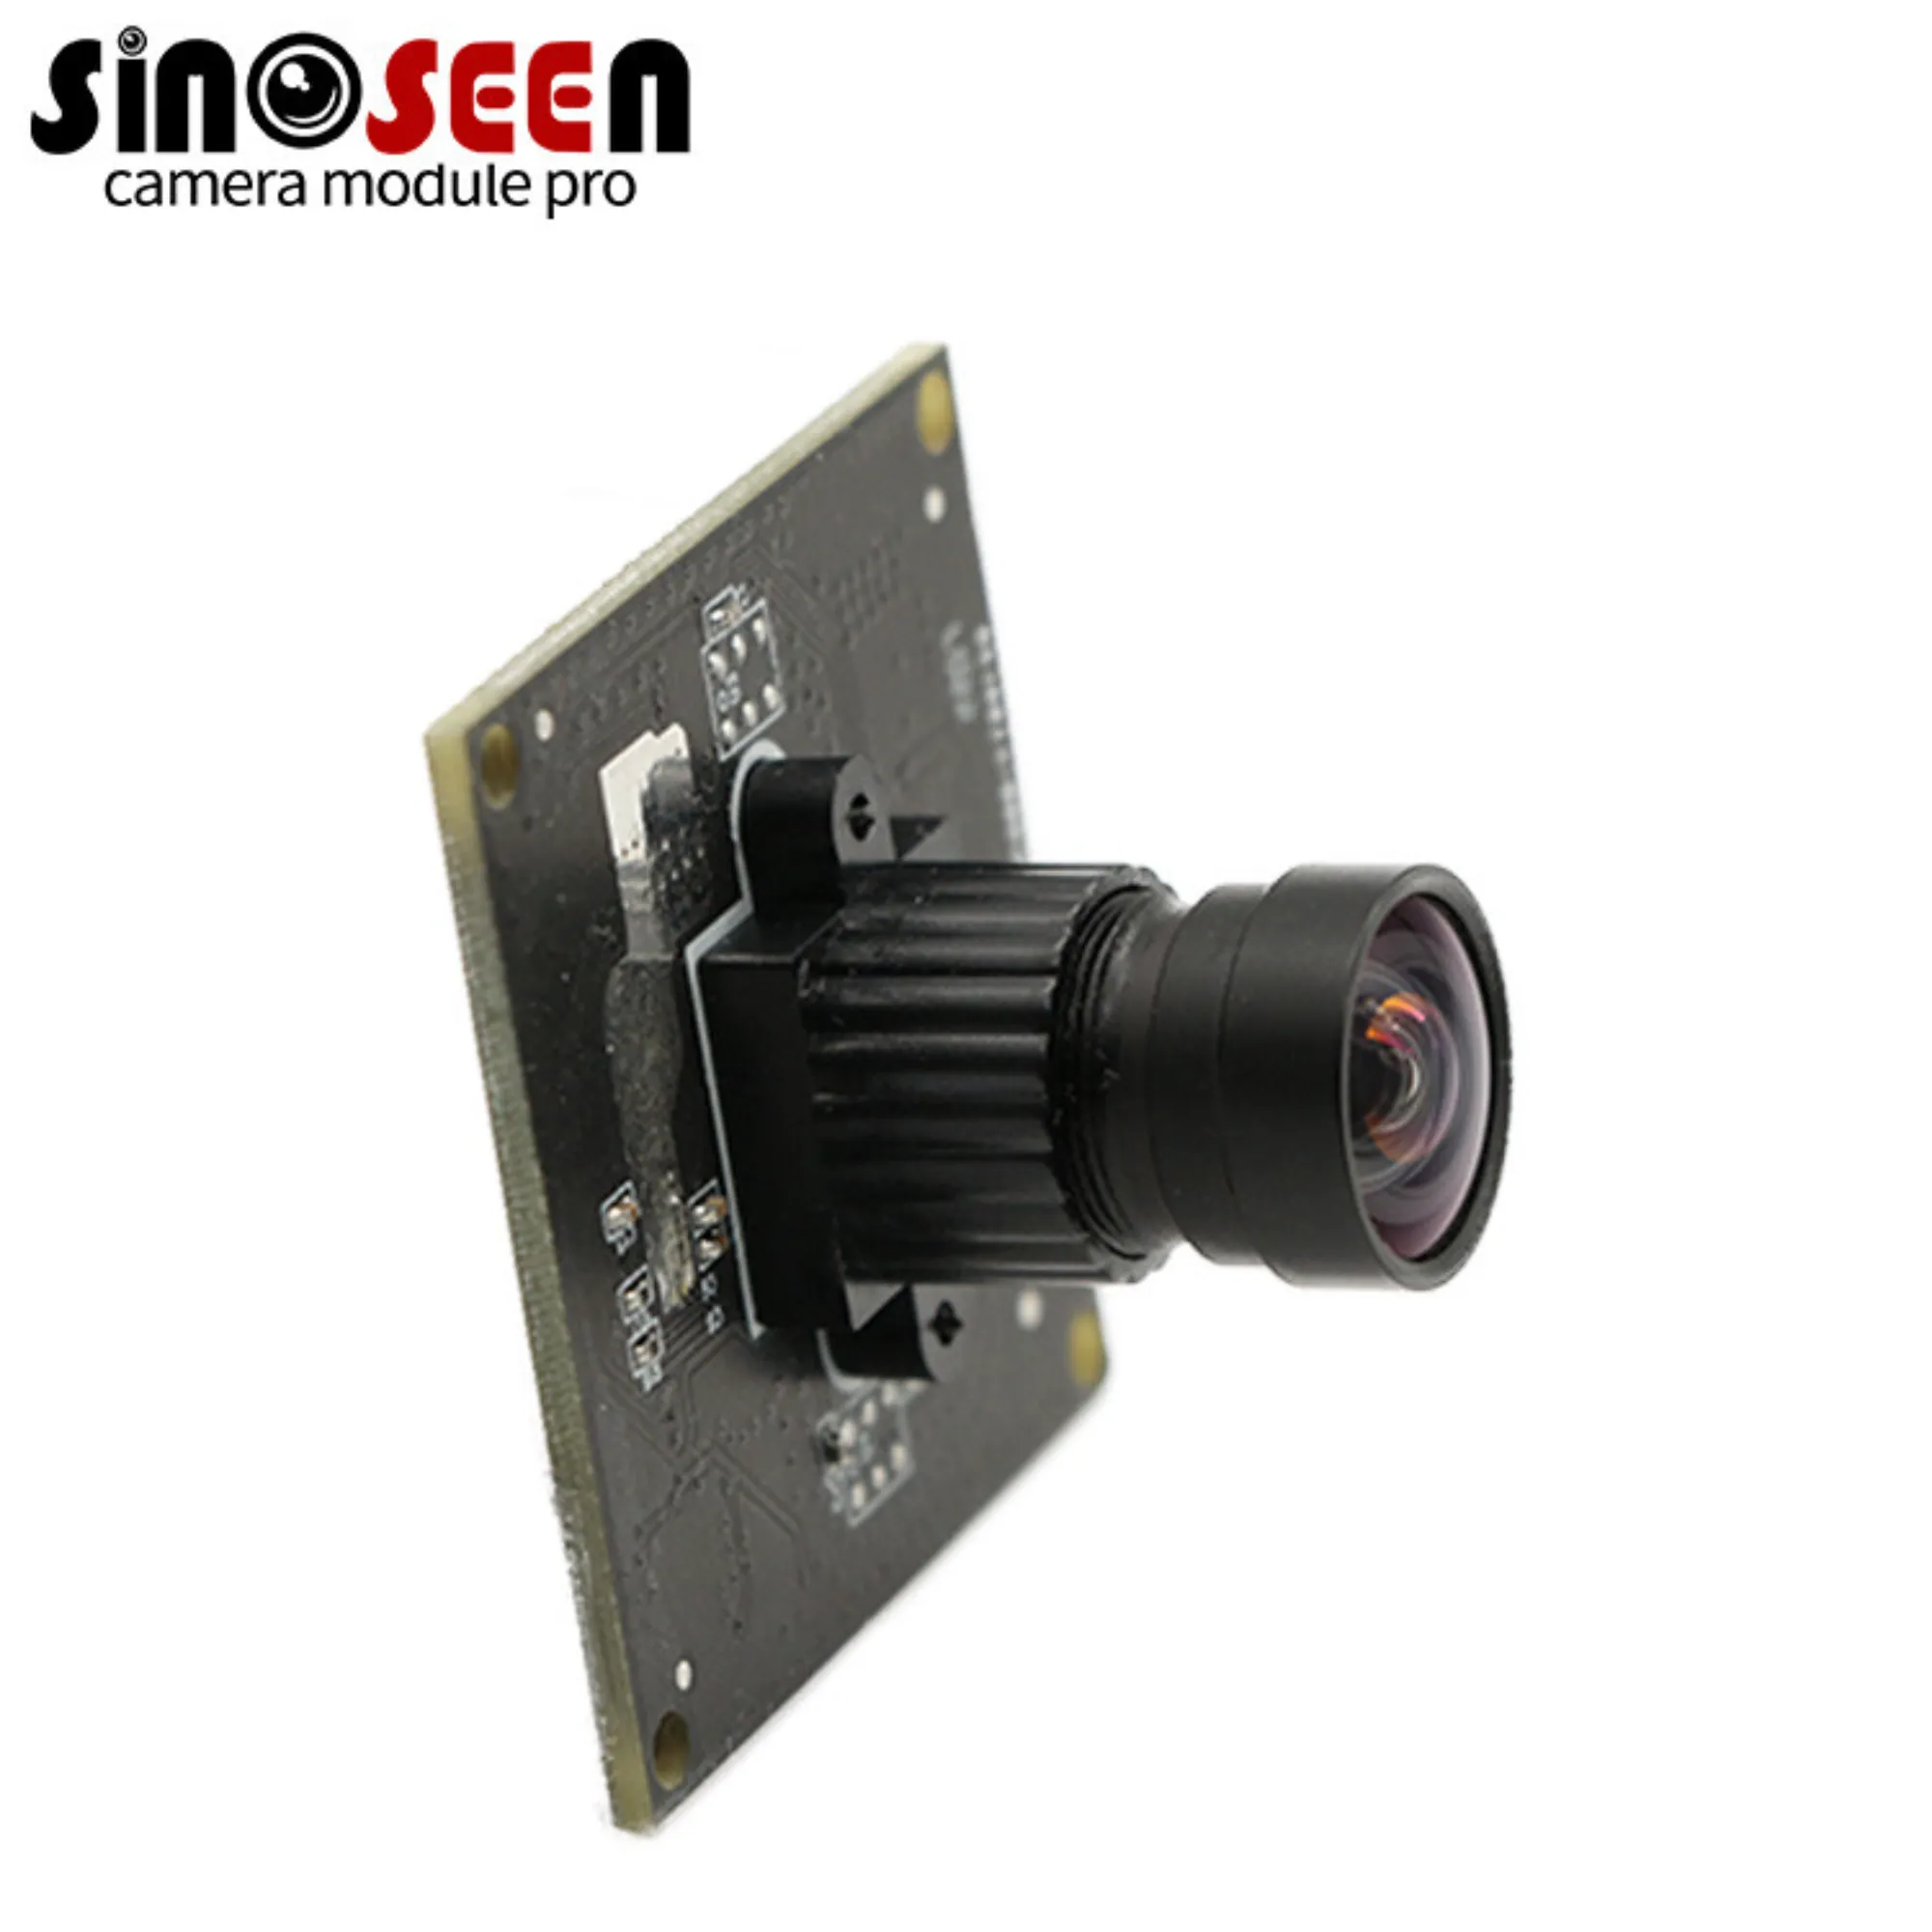 OV7251 Black And White Sensor 0.3MP Global Shutter USB Camera Module